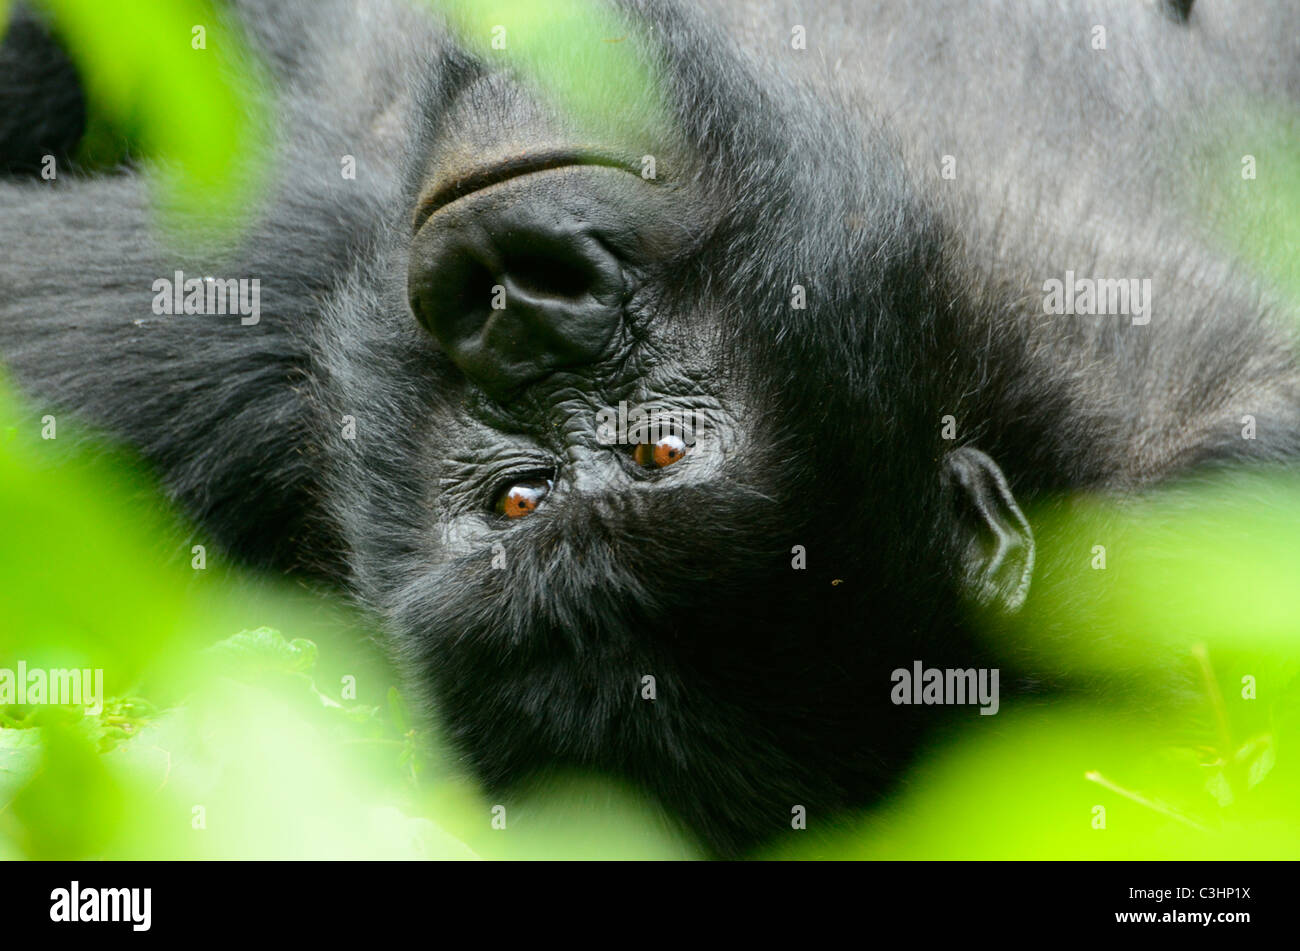 Gorilla trekking am Buhimo im Virunga Nationalpark, demokratische Republik Kongo. Entspannung am Rücken zwischen den grünen Blättern Stockfoto